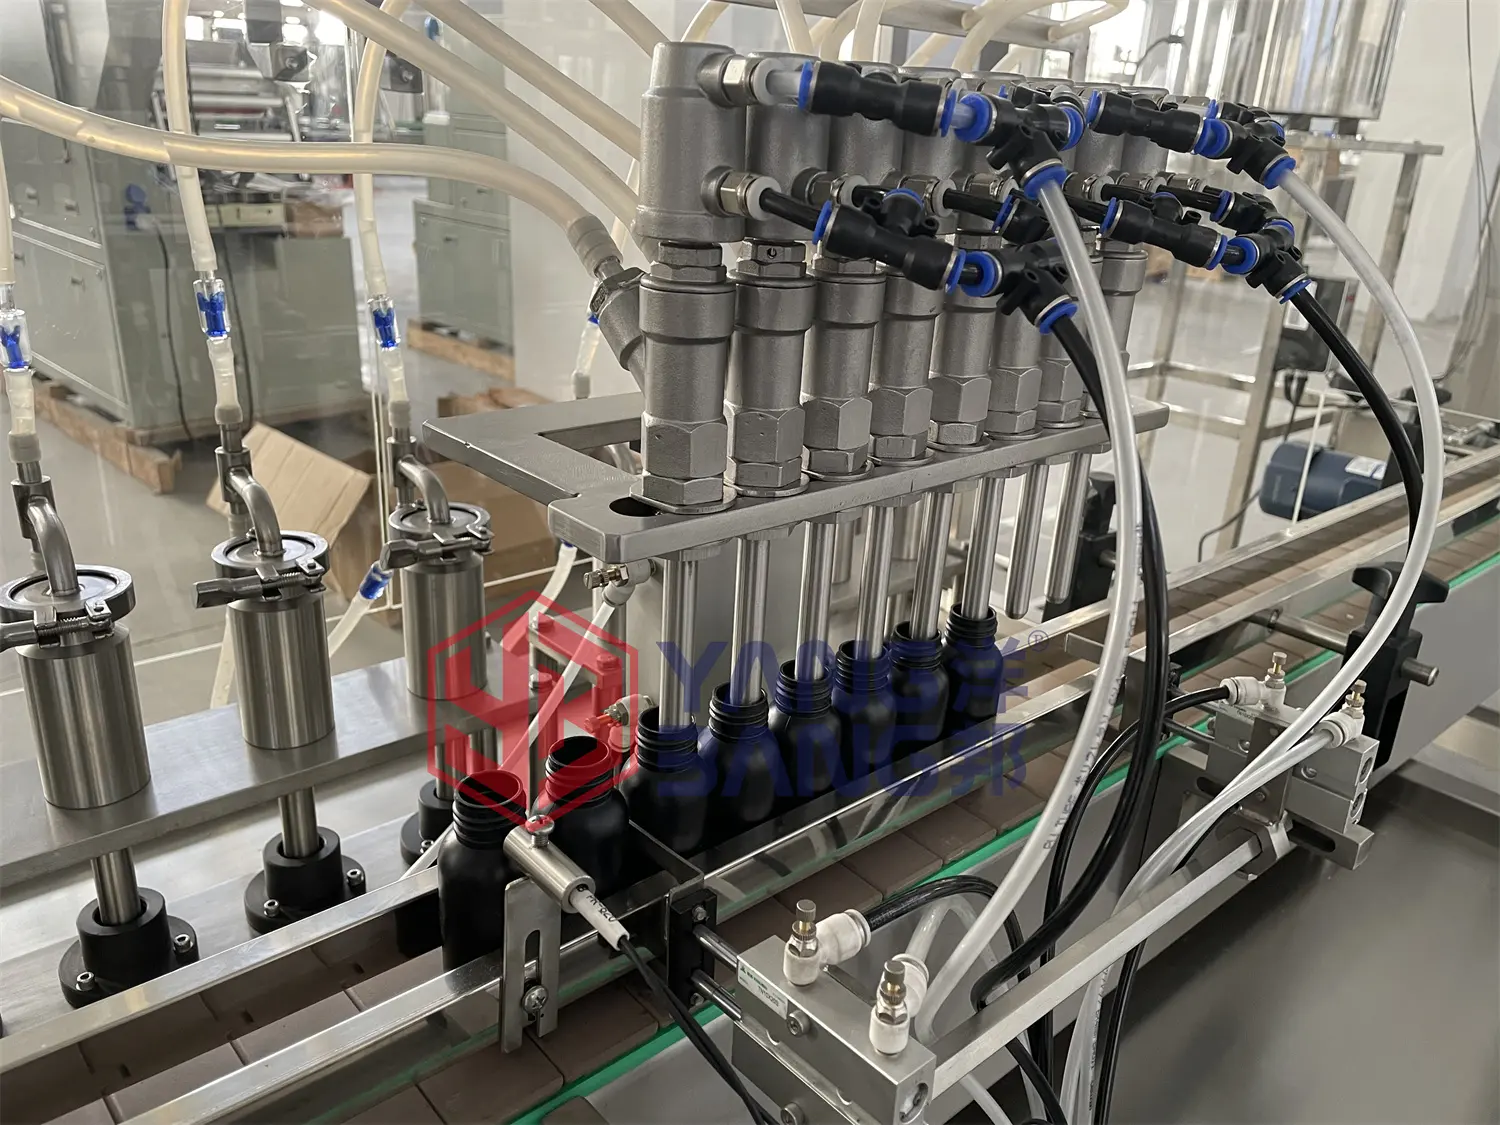 Automatische 2Oz 60Ml Plastic Fles Energiedrank Vulmachine Lijn Shot Fles Drinksap Vul-En Afdekmachine